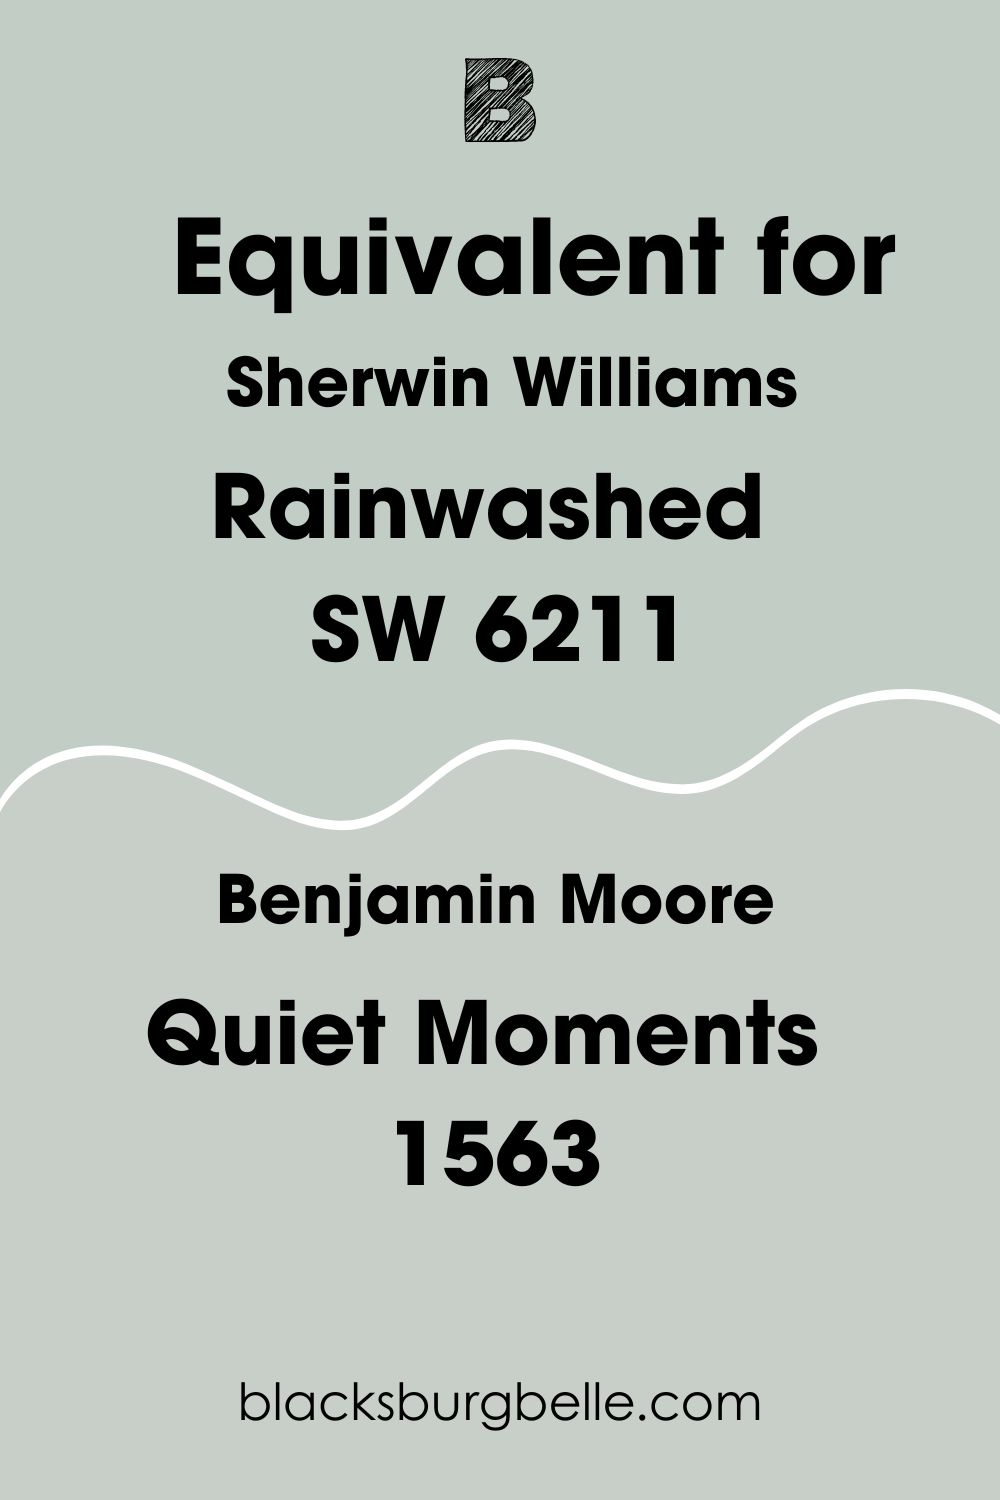 Sherwin Williams Rainwashed Benjamin Moore Equivalent